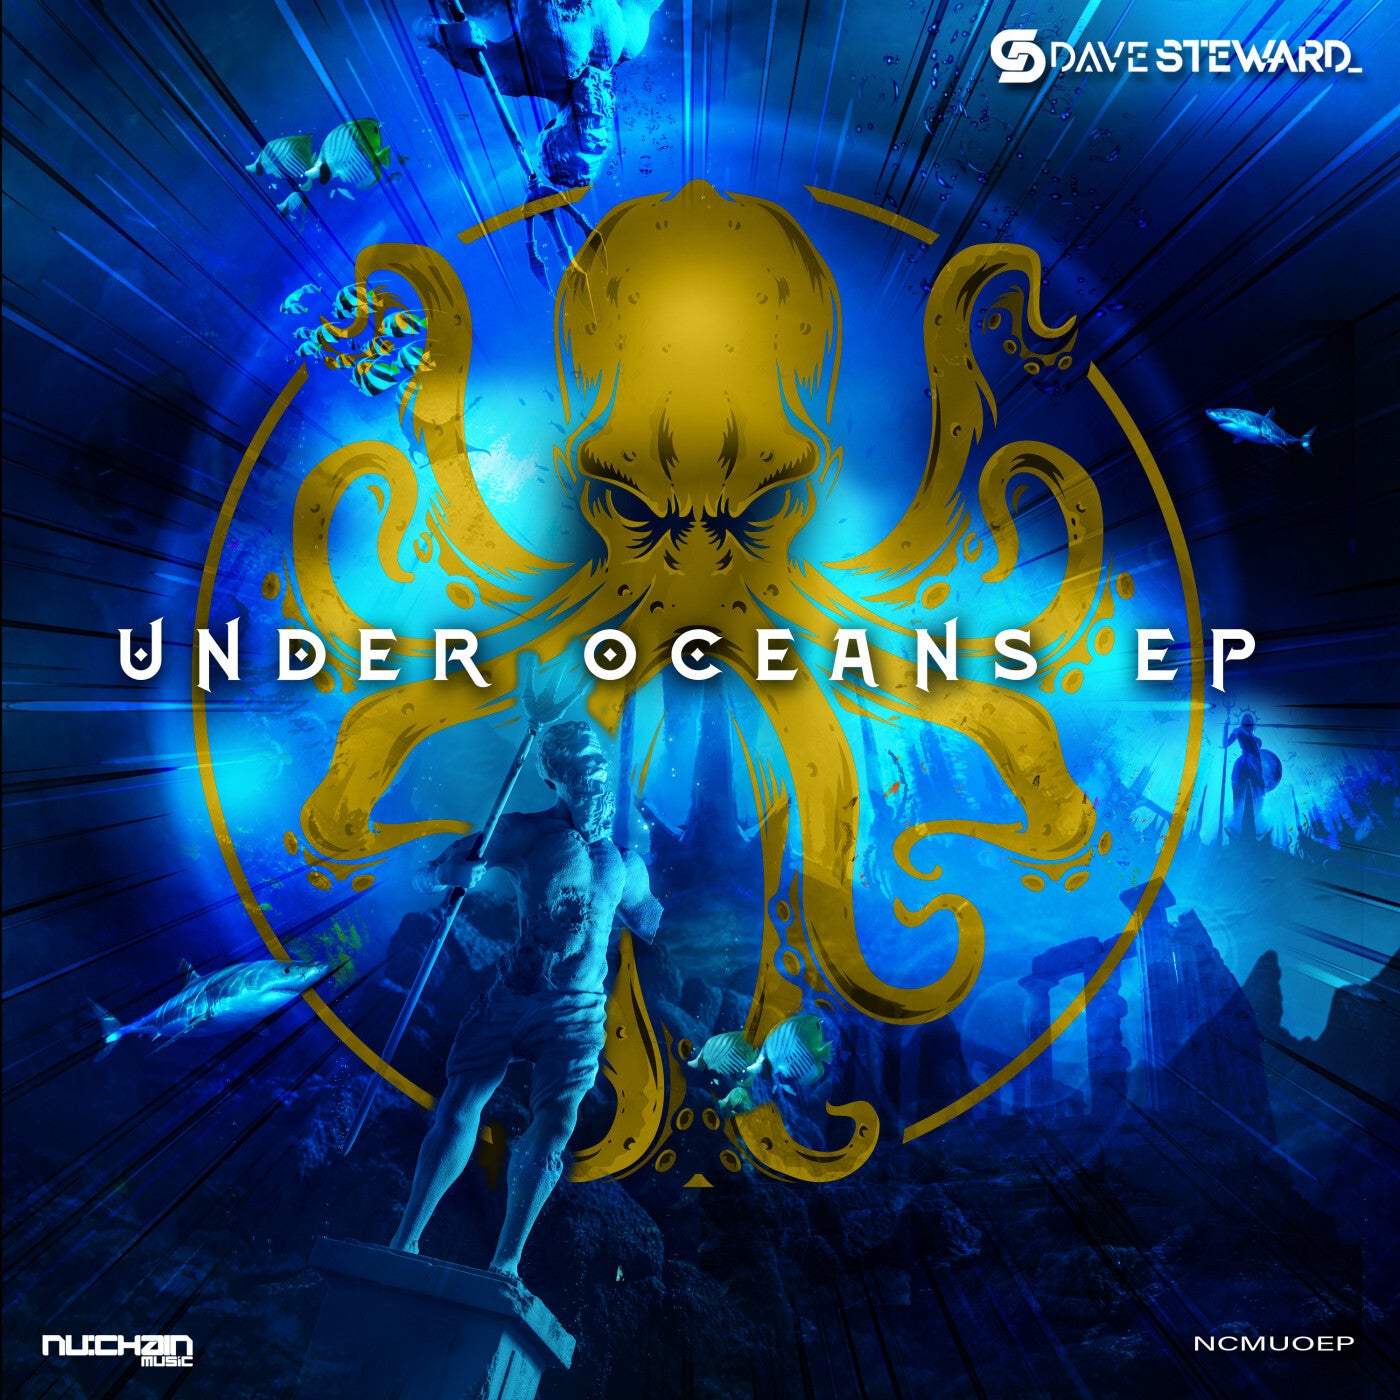 Under Oceans EP